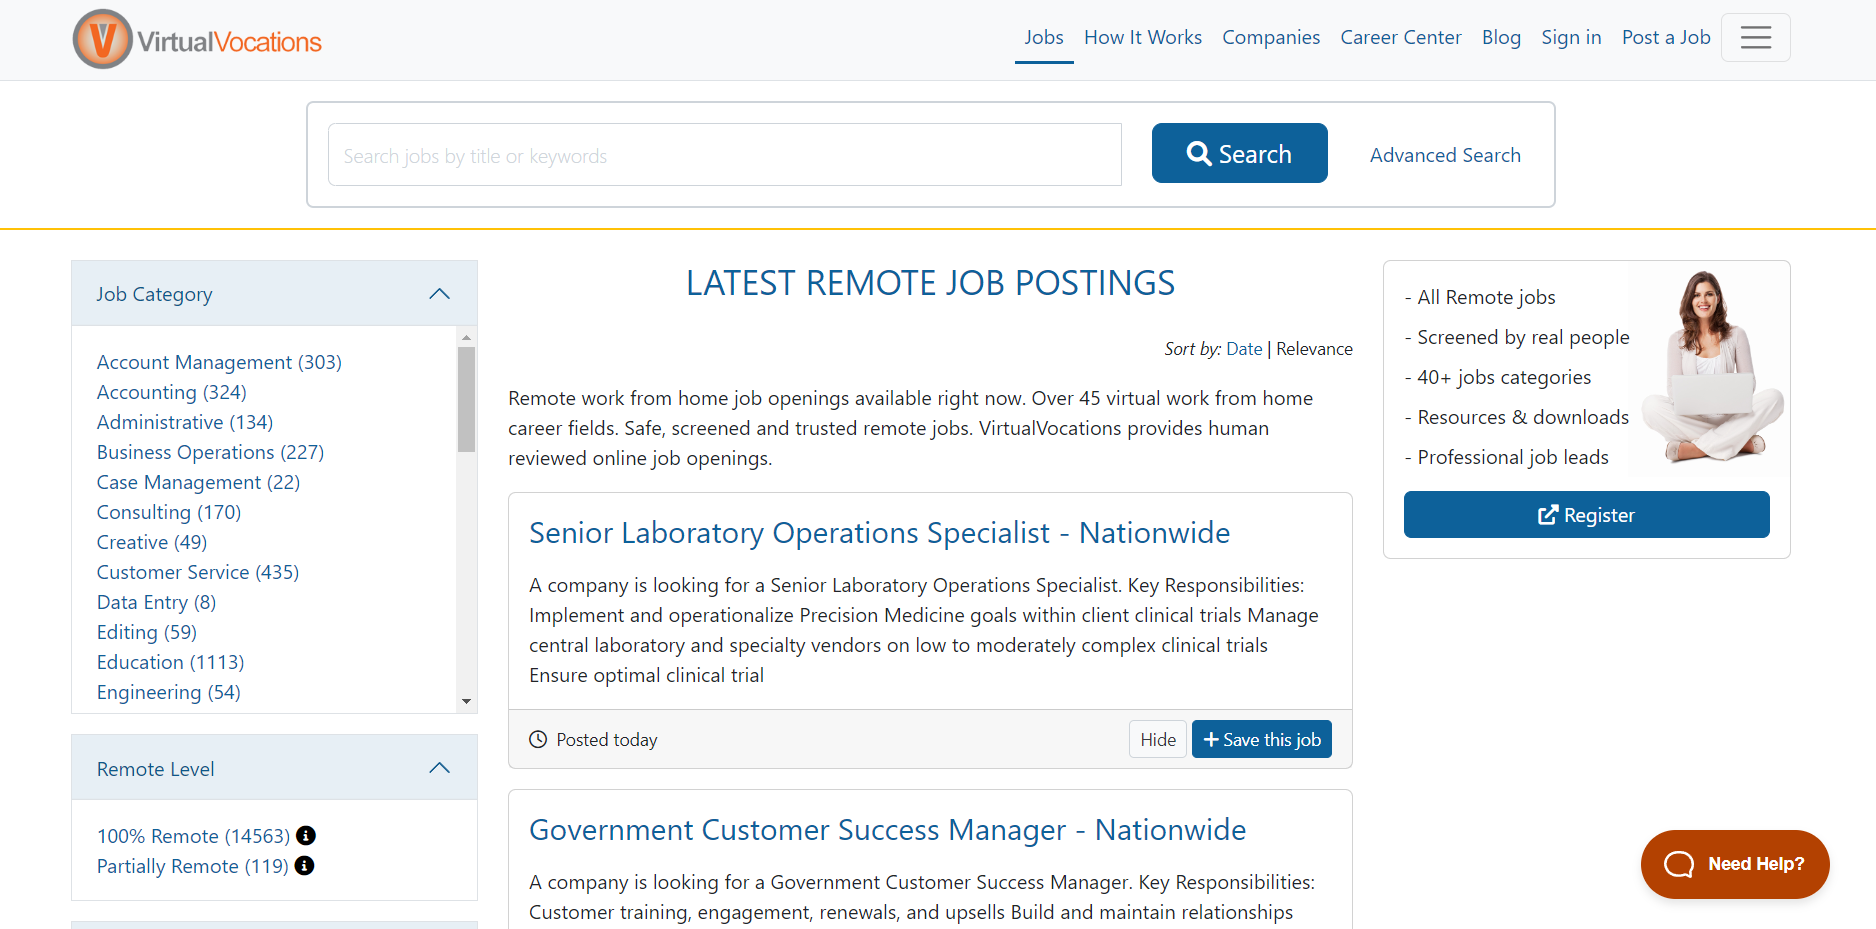 remote Jobs Website Virtual Vocations